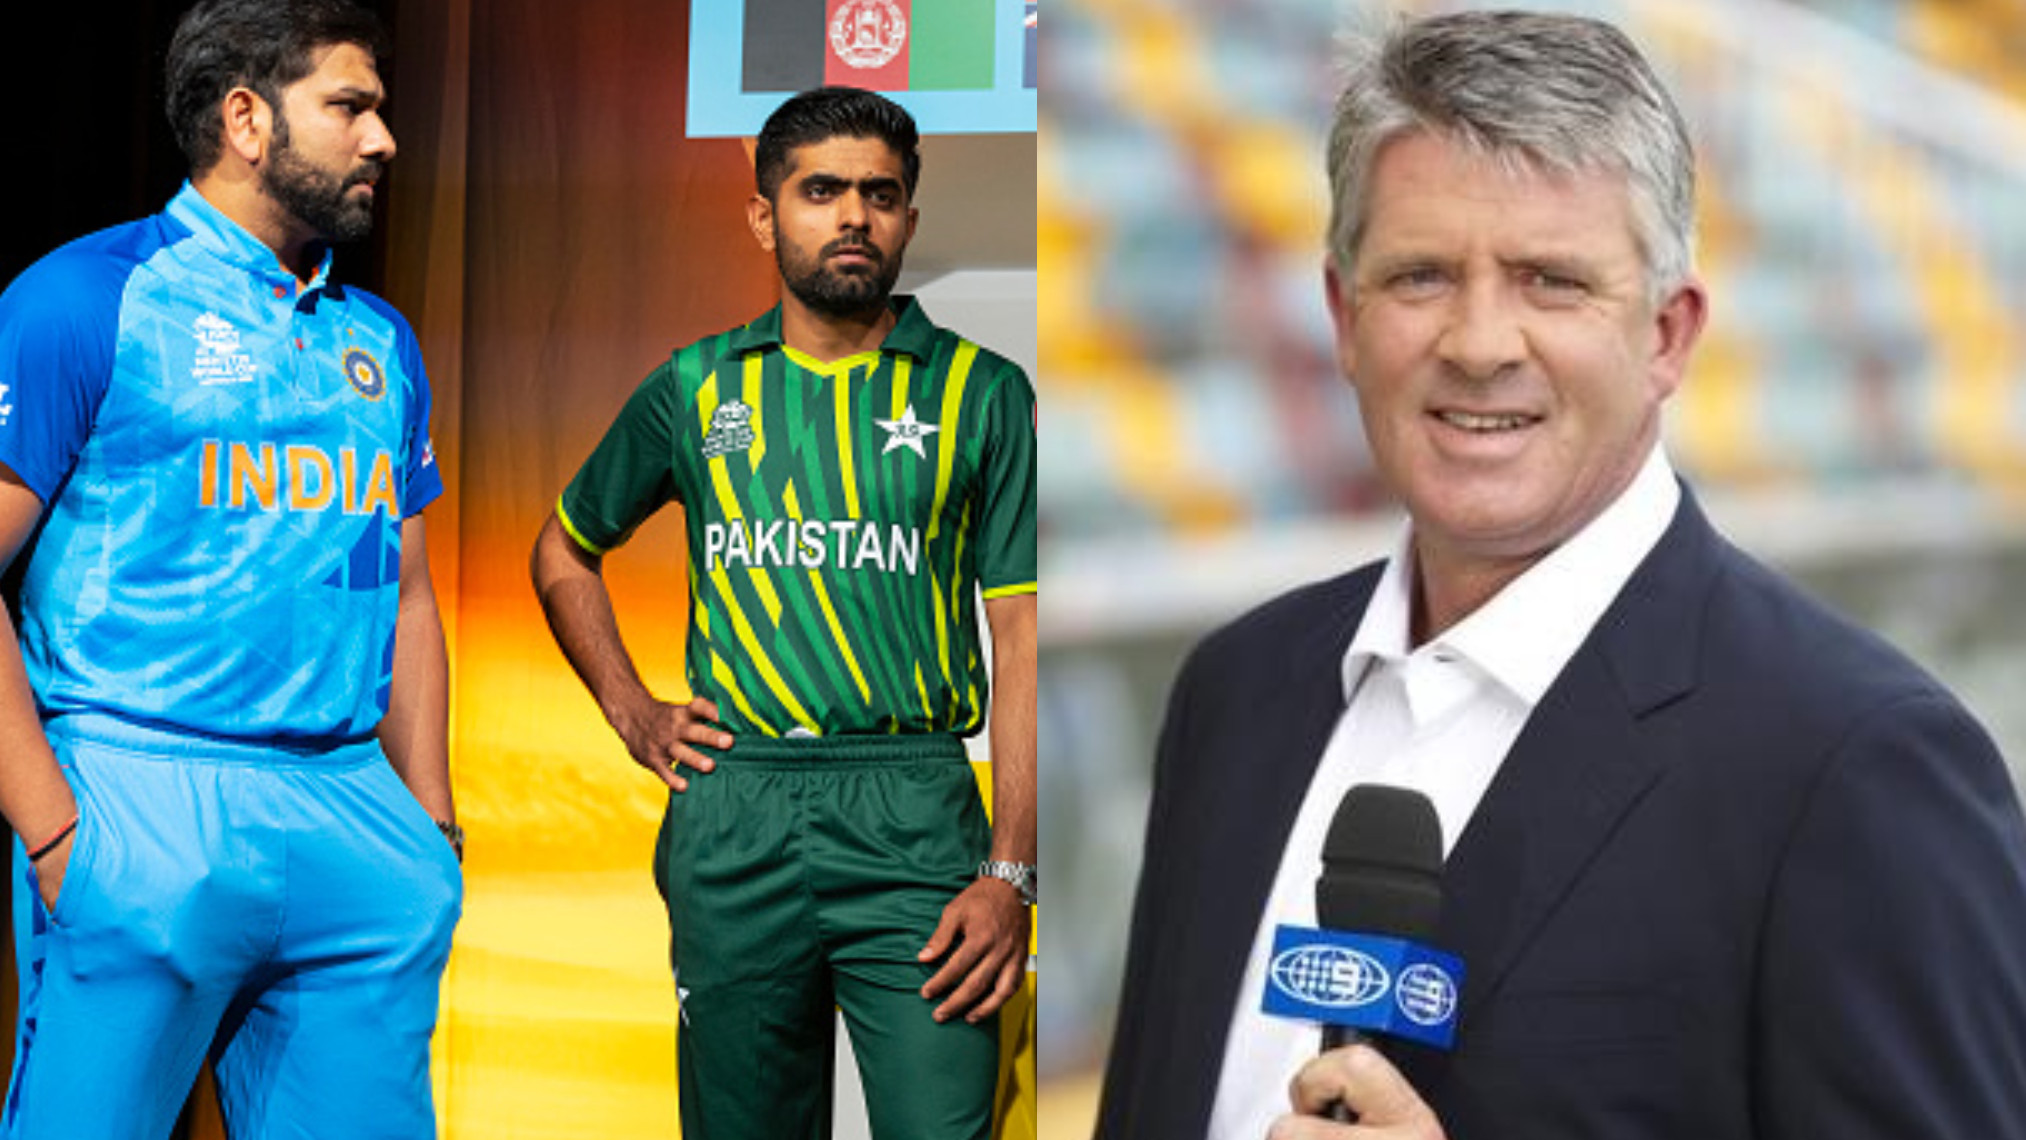 “Talks for India v Pakistan Test in Australia on”- Simon O’Donnell says ODI tri-series also involving Australia being planned